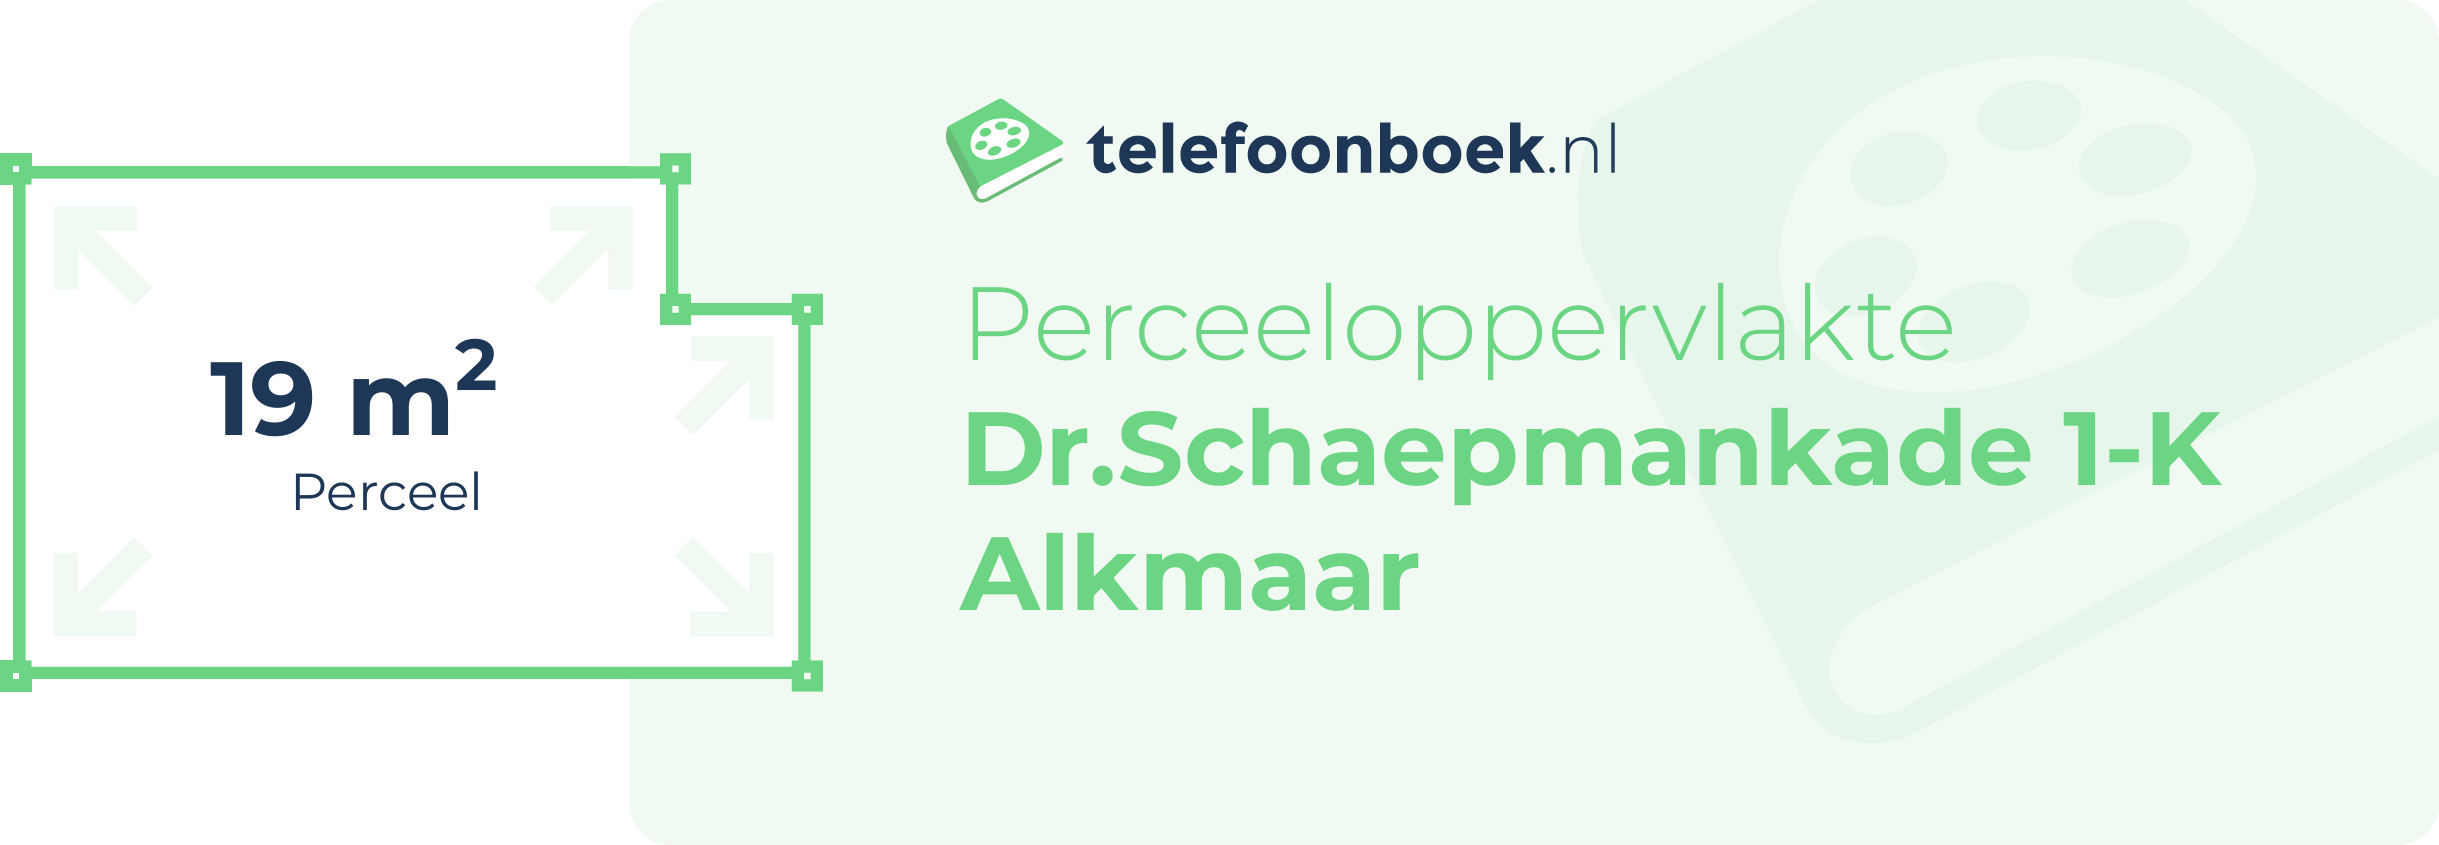 Perceeloppervlakte Dr.Schaepmankade 1-K Alkmaar